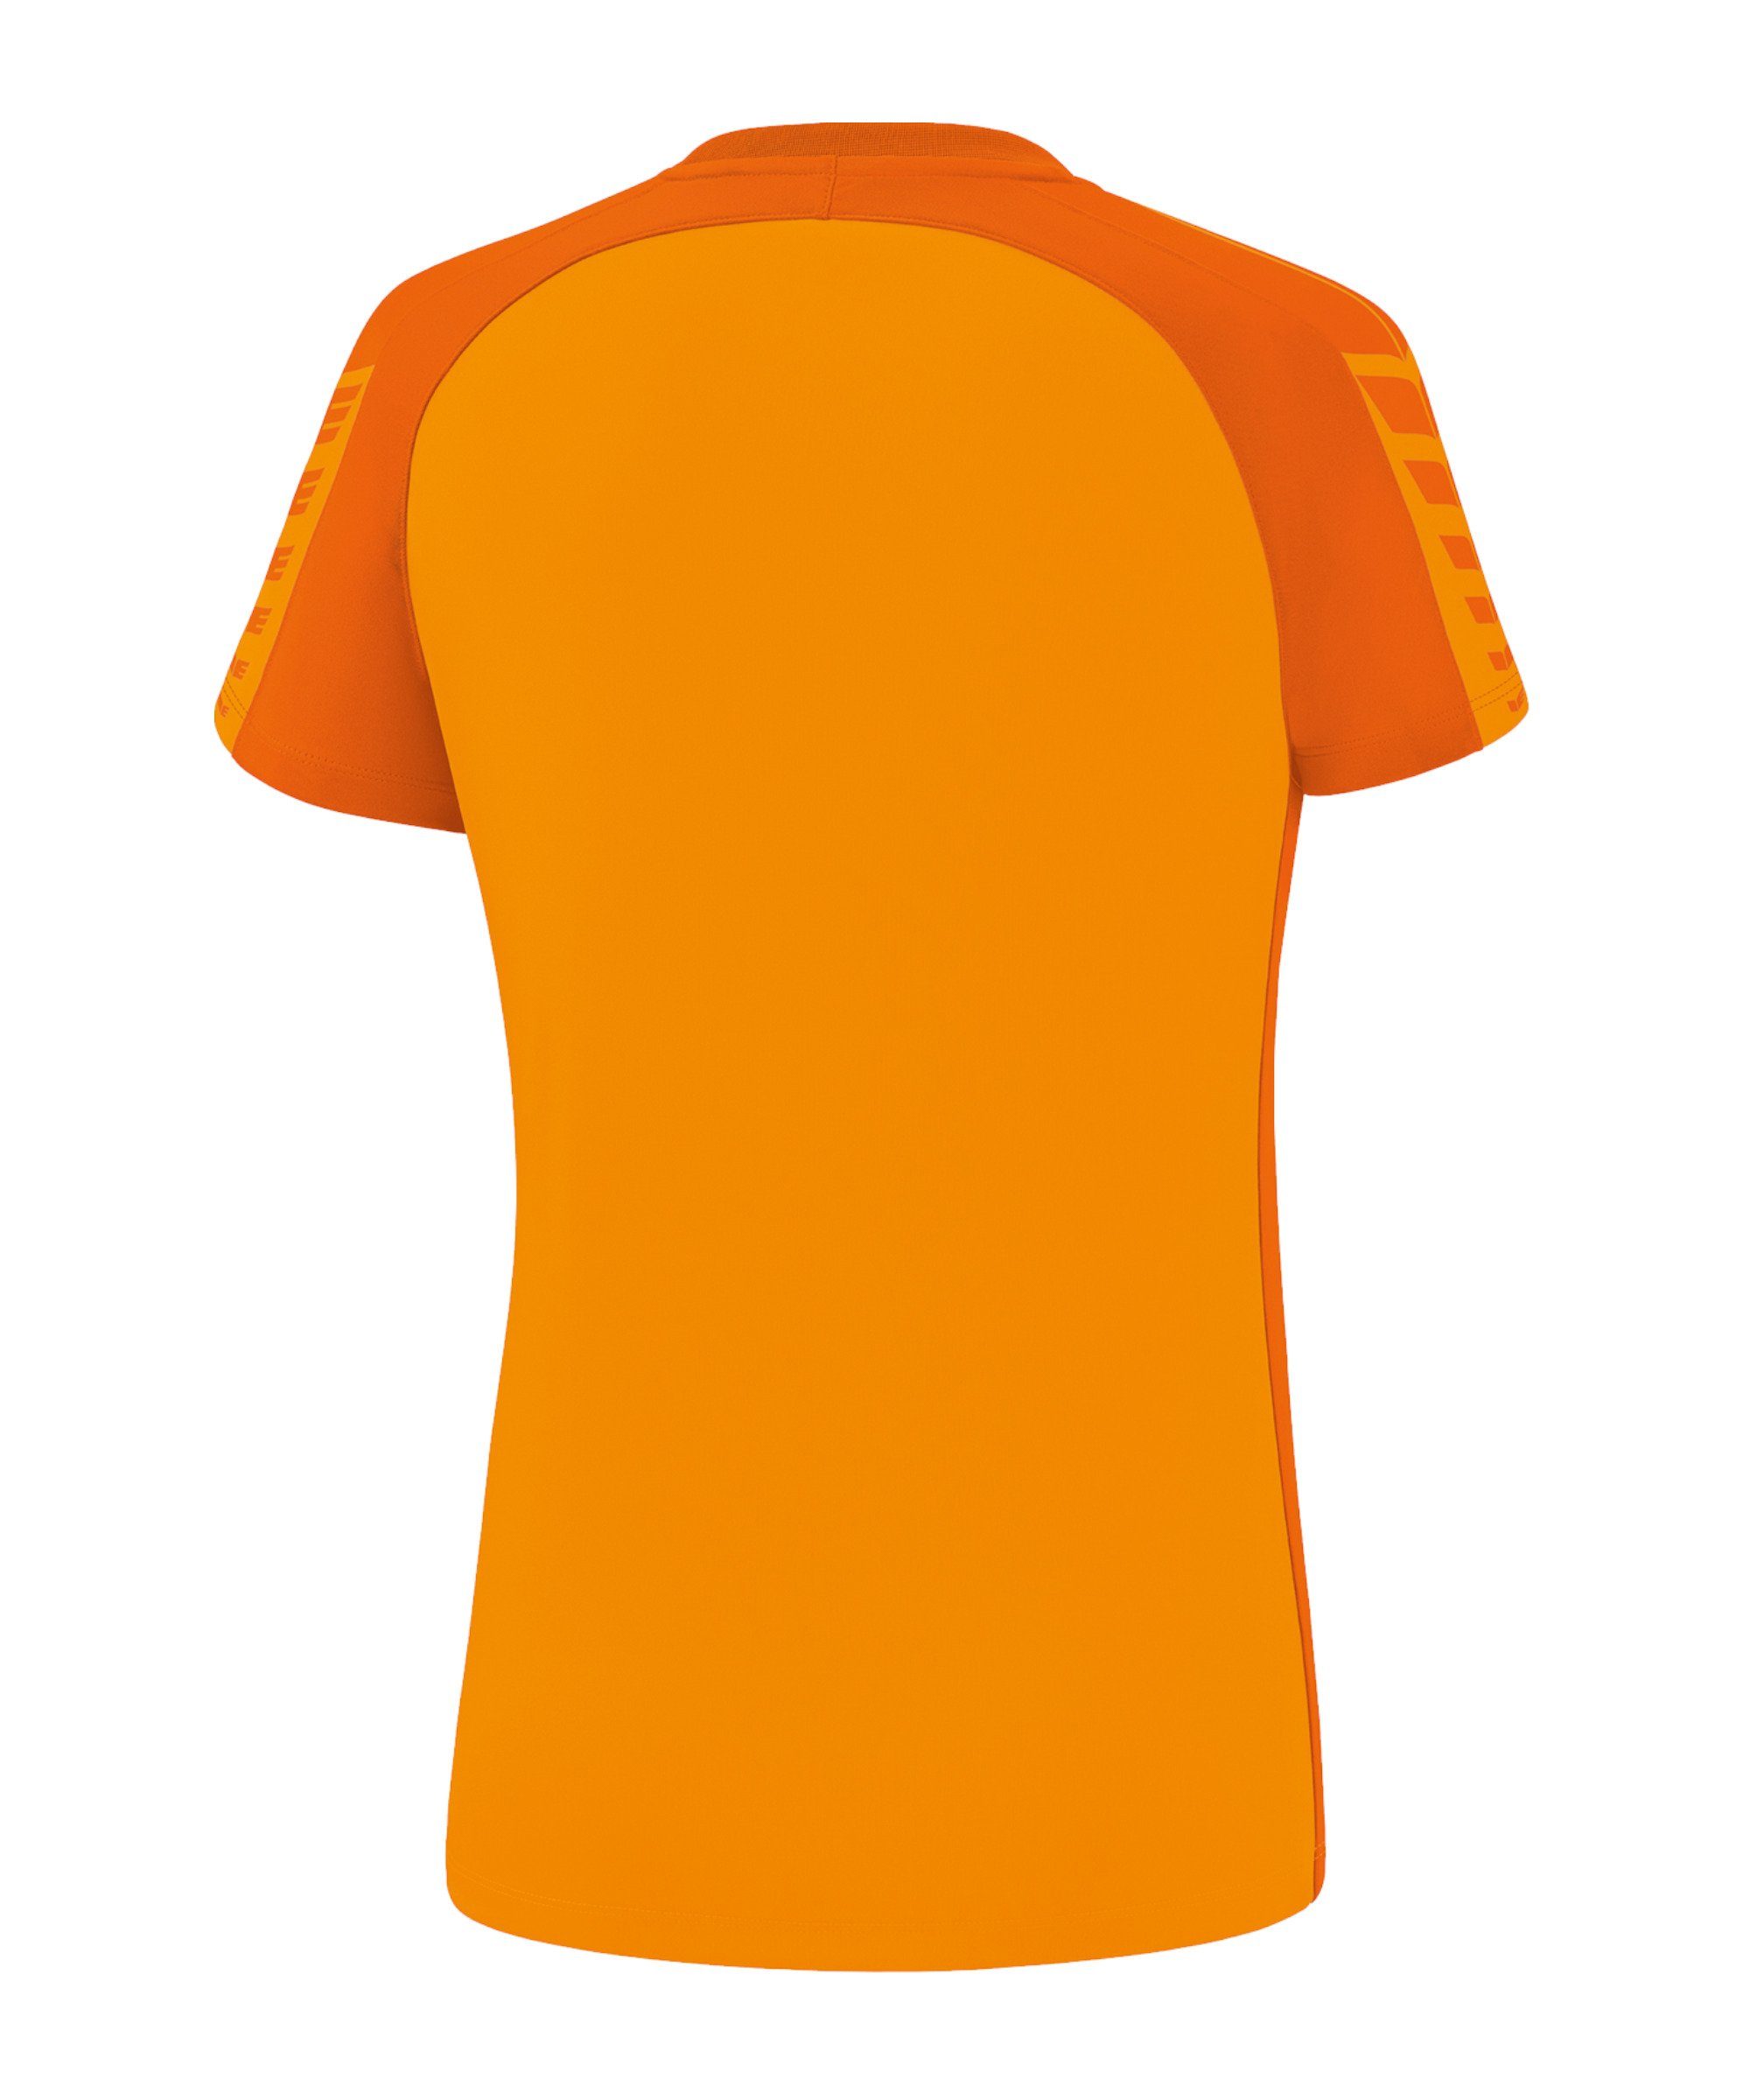 Erima T-Shirt Six T-Shirt Wings Damen default orangeorange